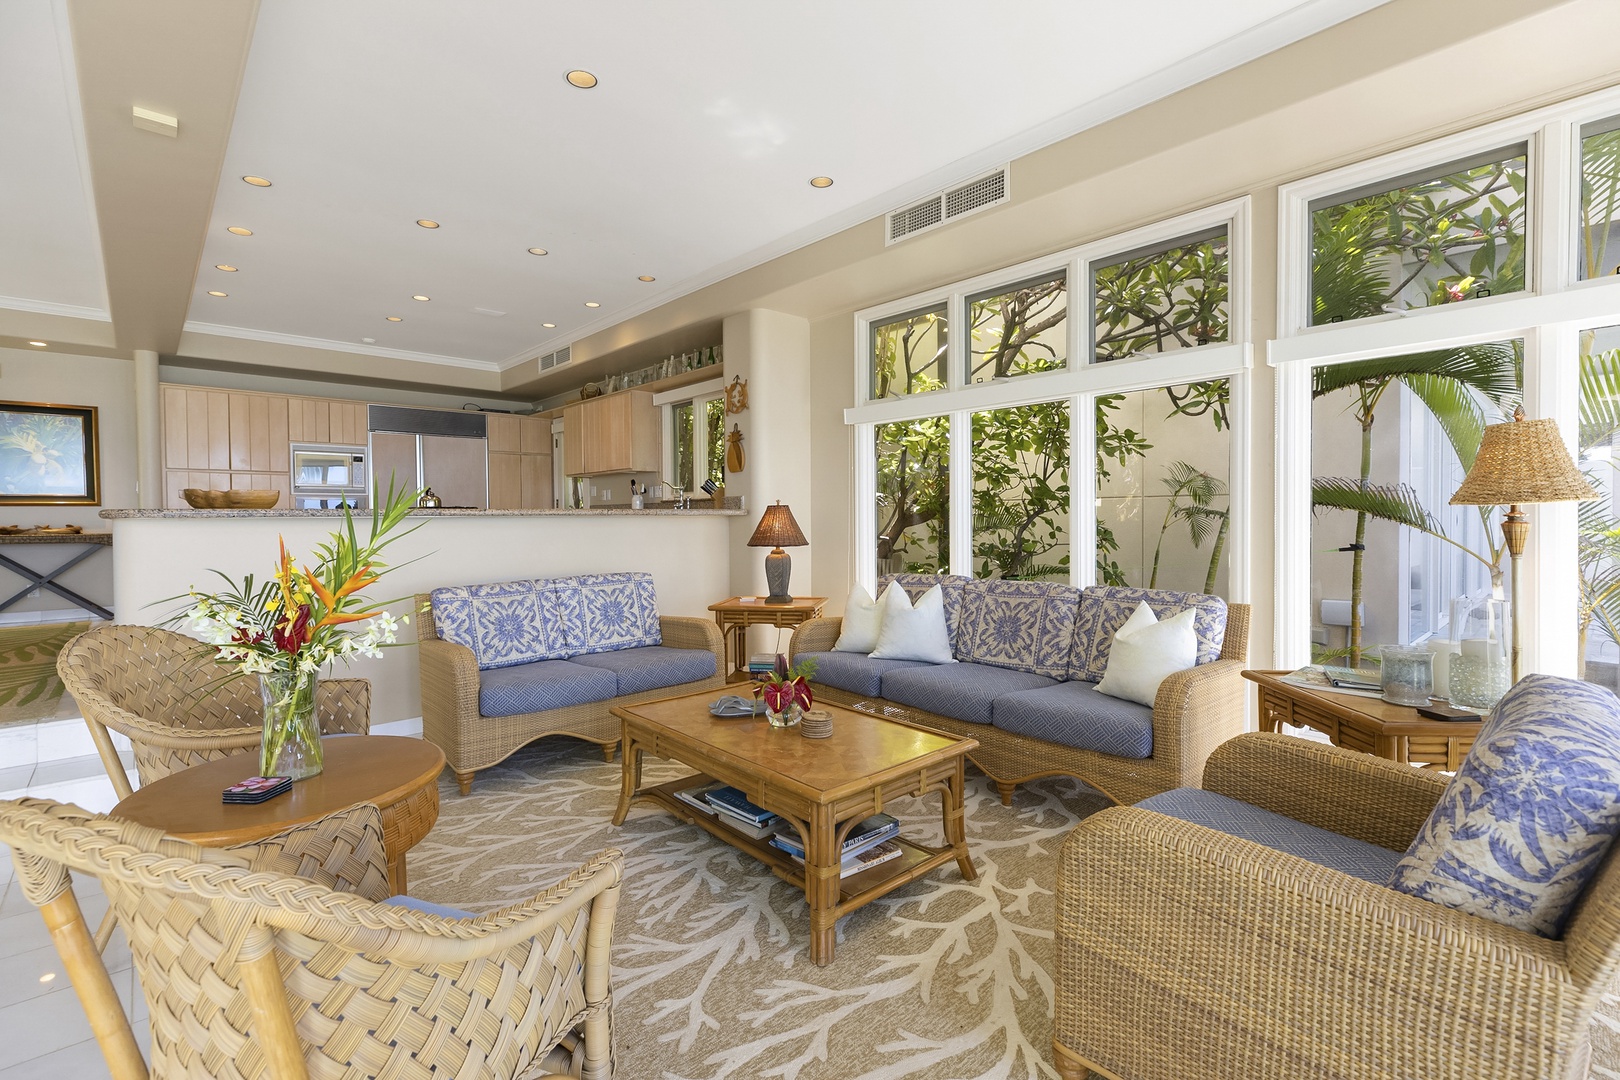 Honolulu Vacation Rentals, Diamond Head Surf House - Living room area, looking mauka (toward the mountains)